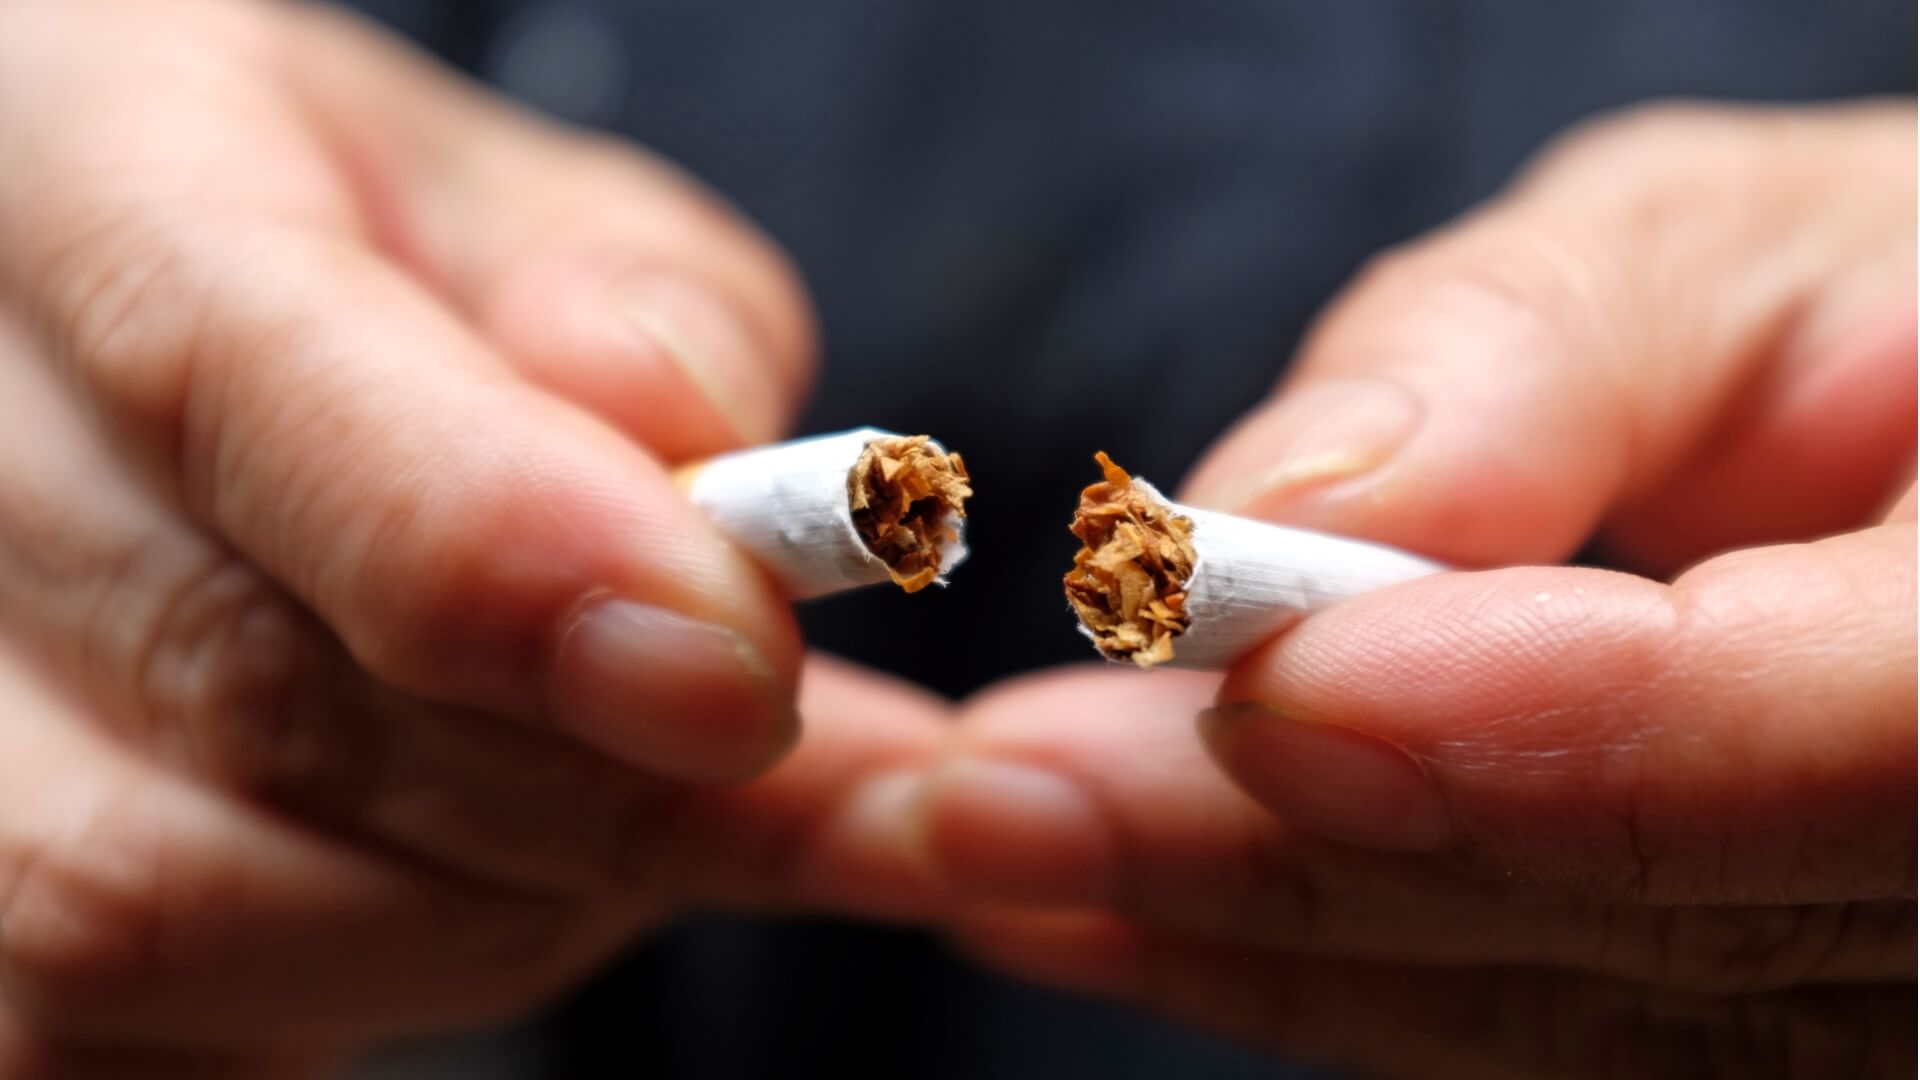 college students choosing marijuana over cigarettes